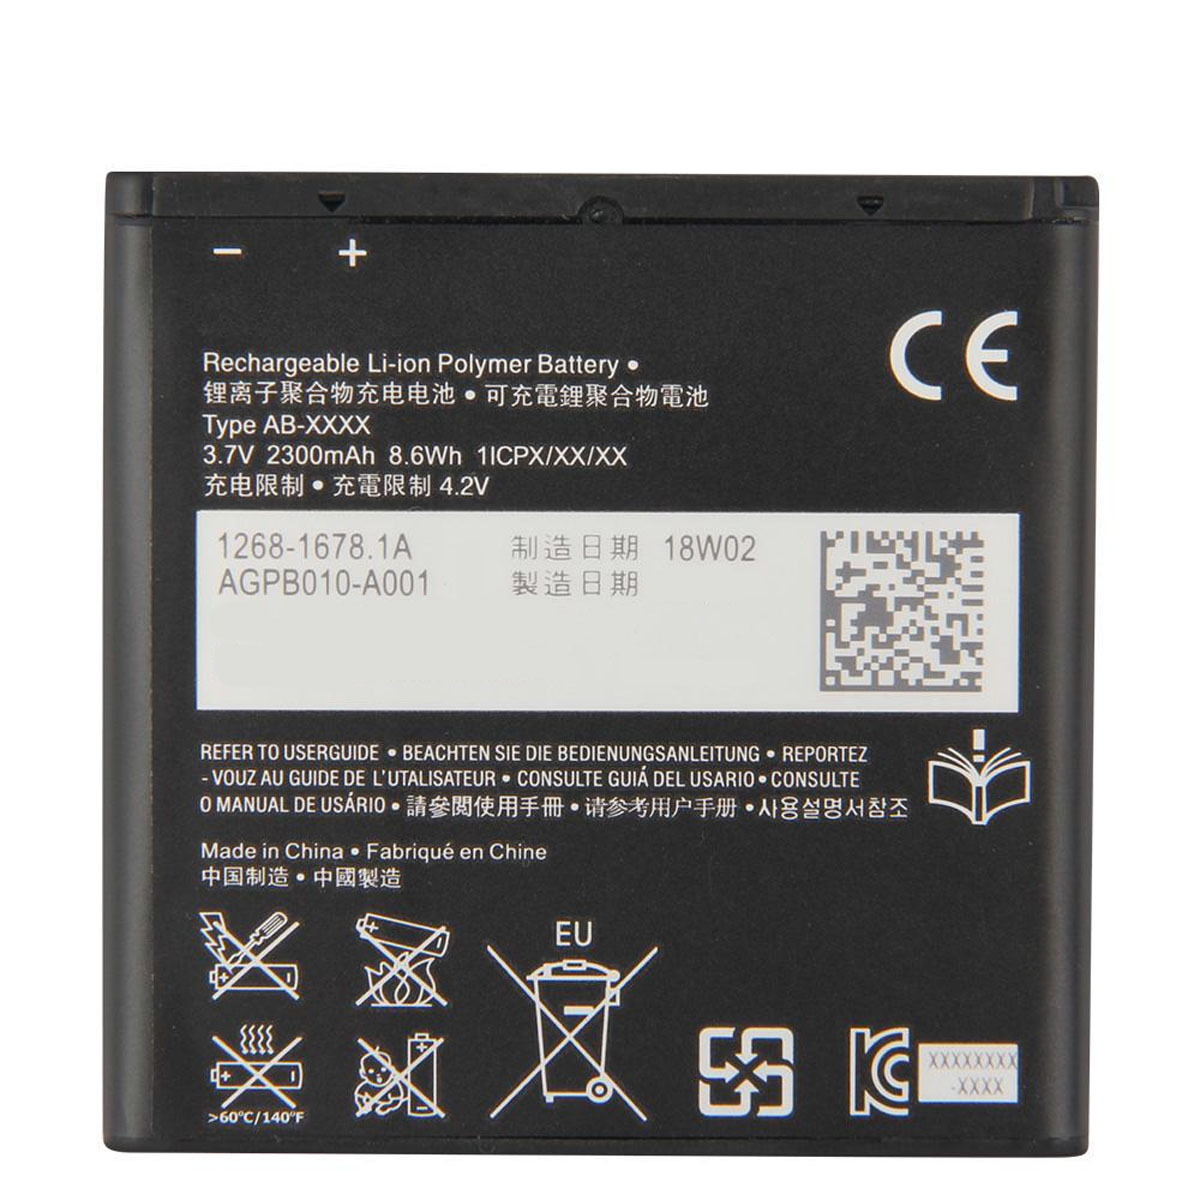 АКБ (Аккумулятор) BA950 для Sony Xperia ZR C5502, цвет черный